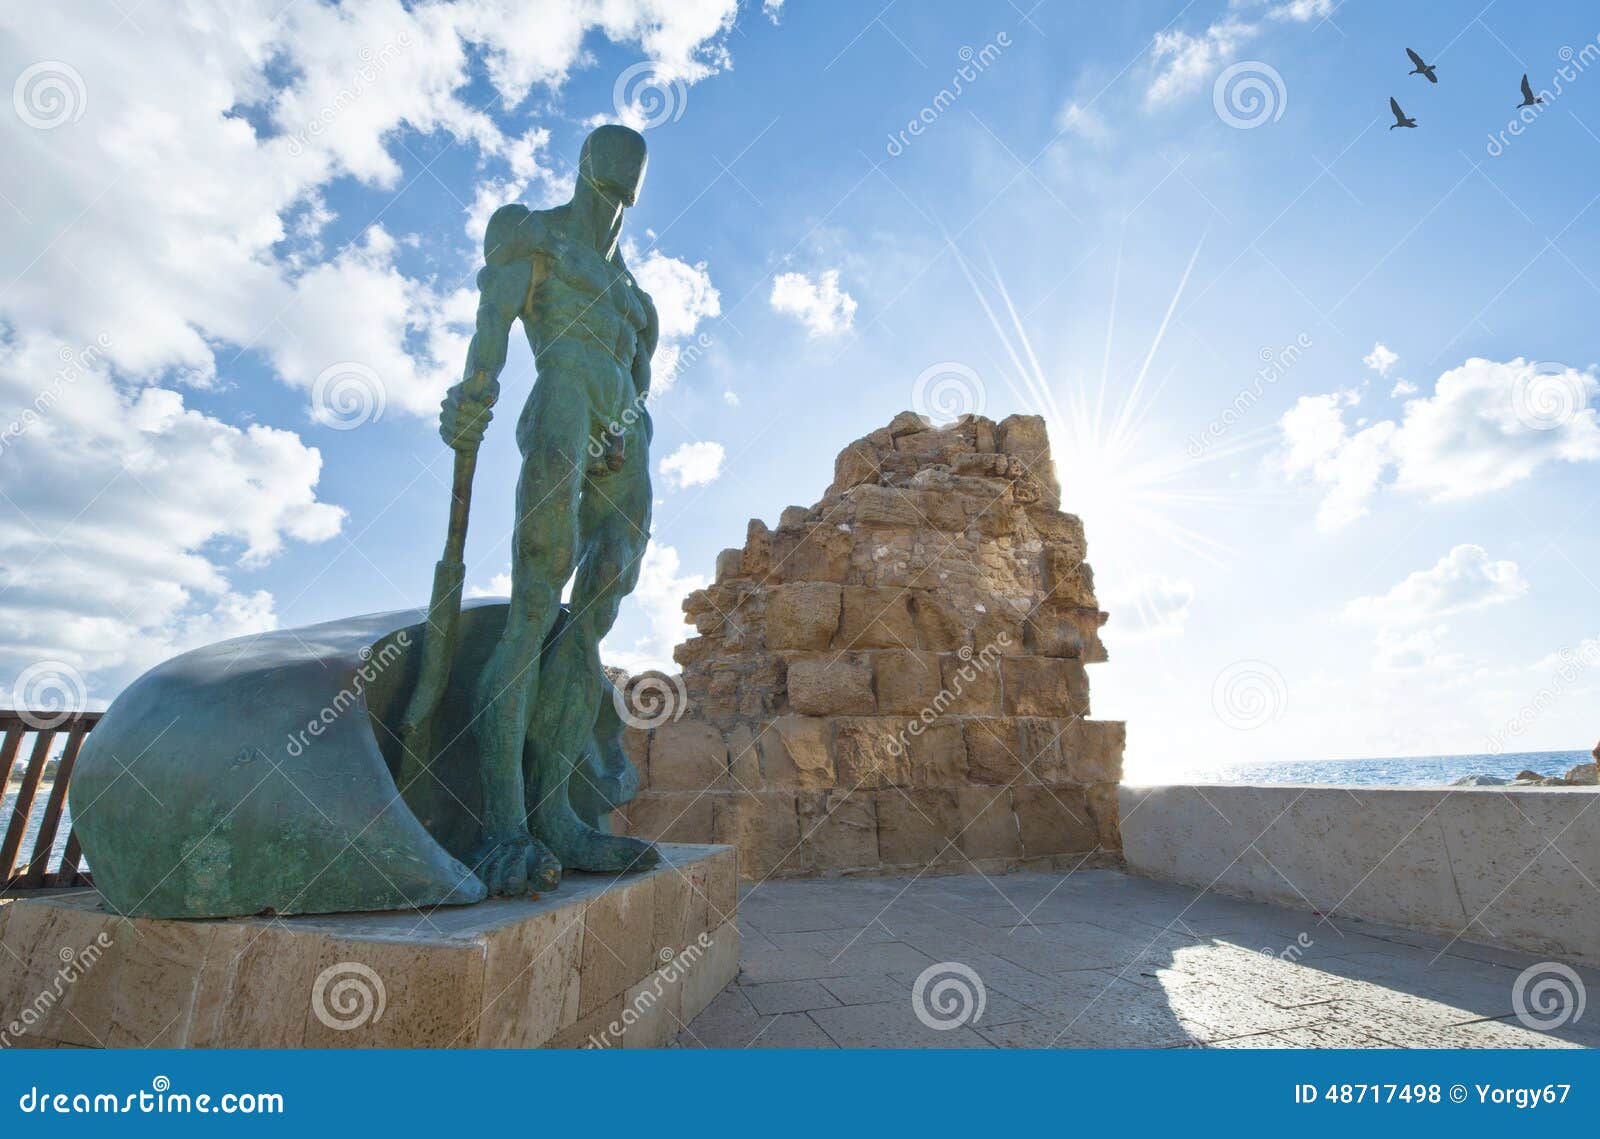 Sculpture Of Man At Caesarea, Israel Editorial Photography 